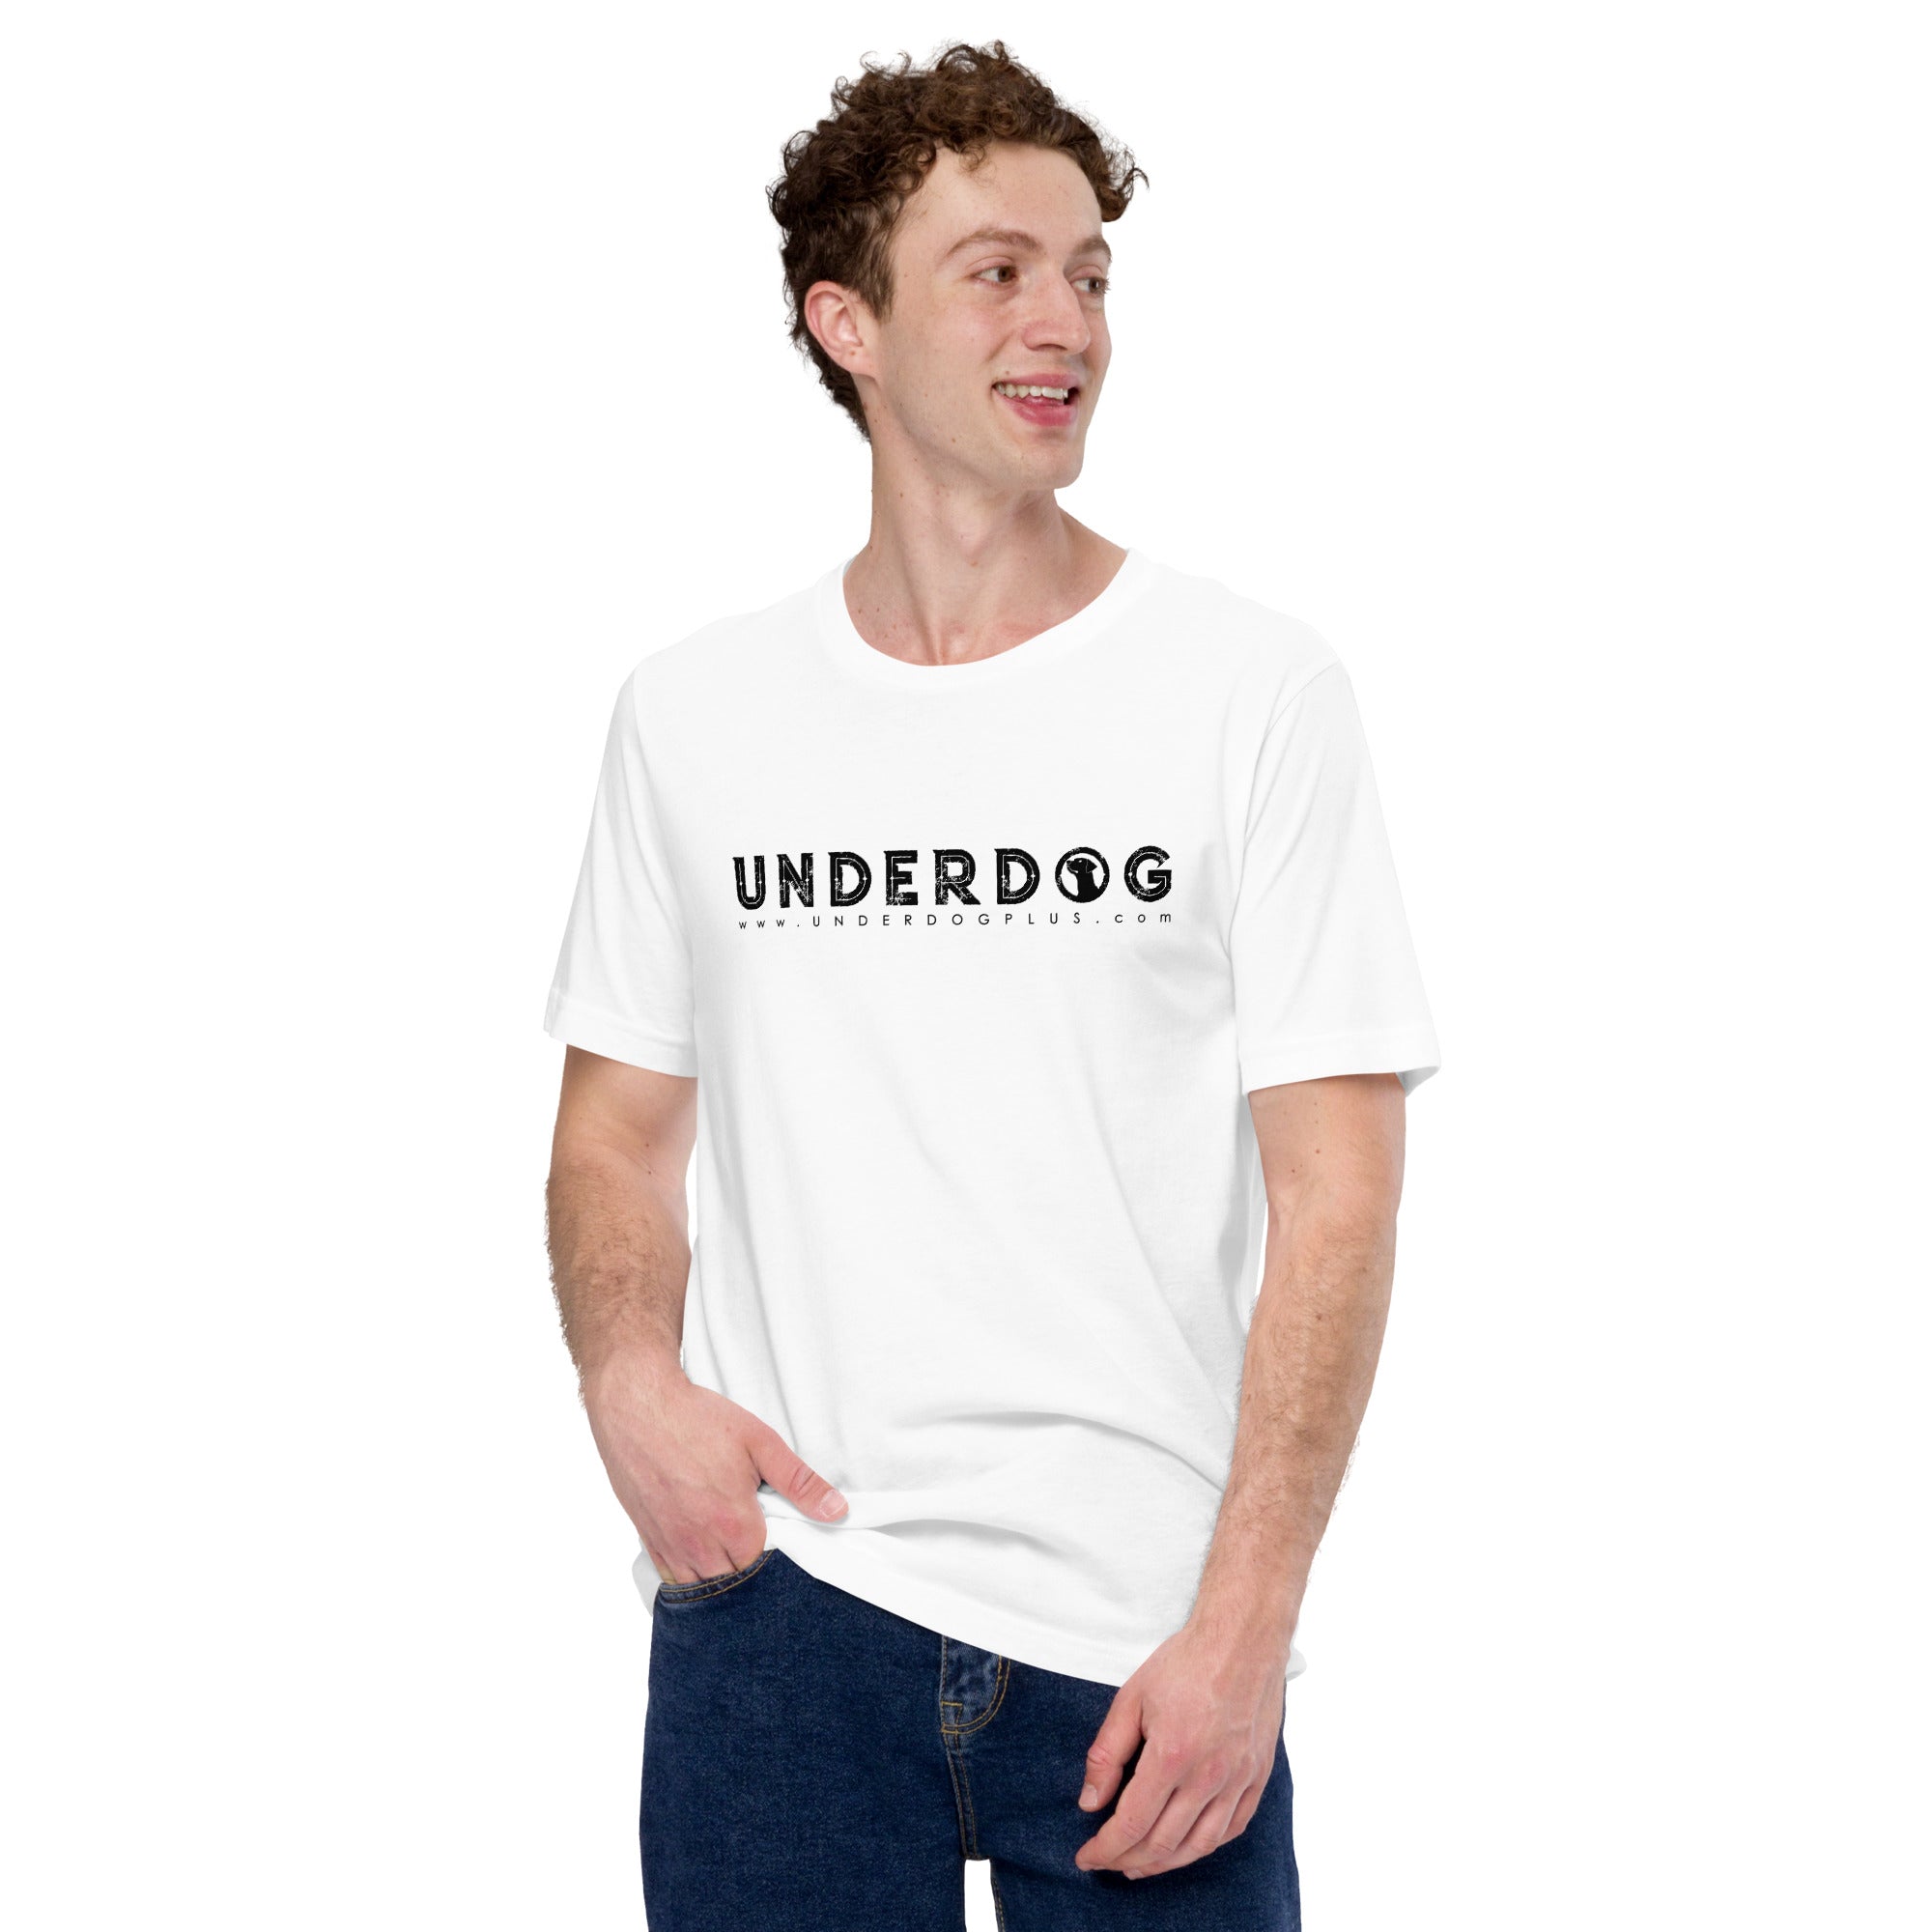 Underdog Black on Light T-Shirt